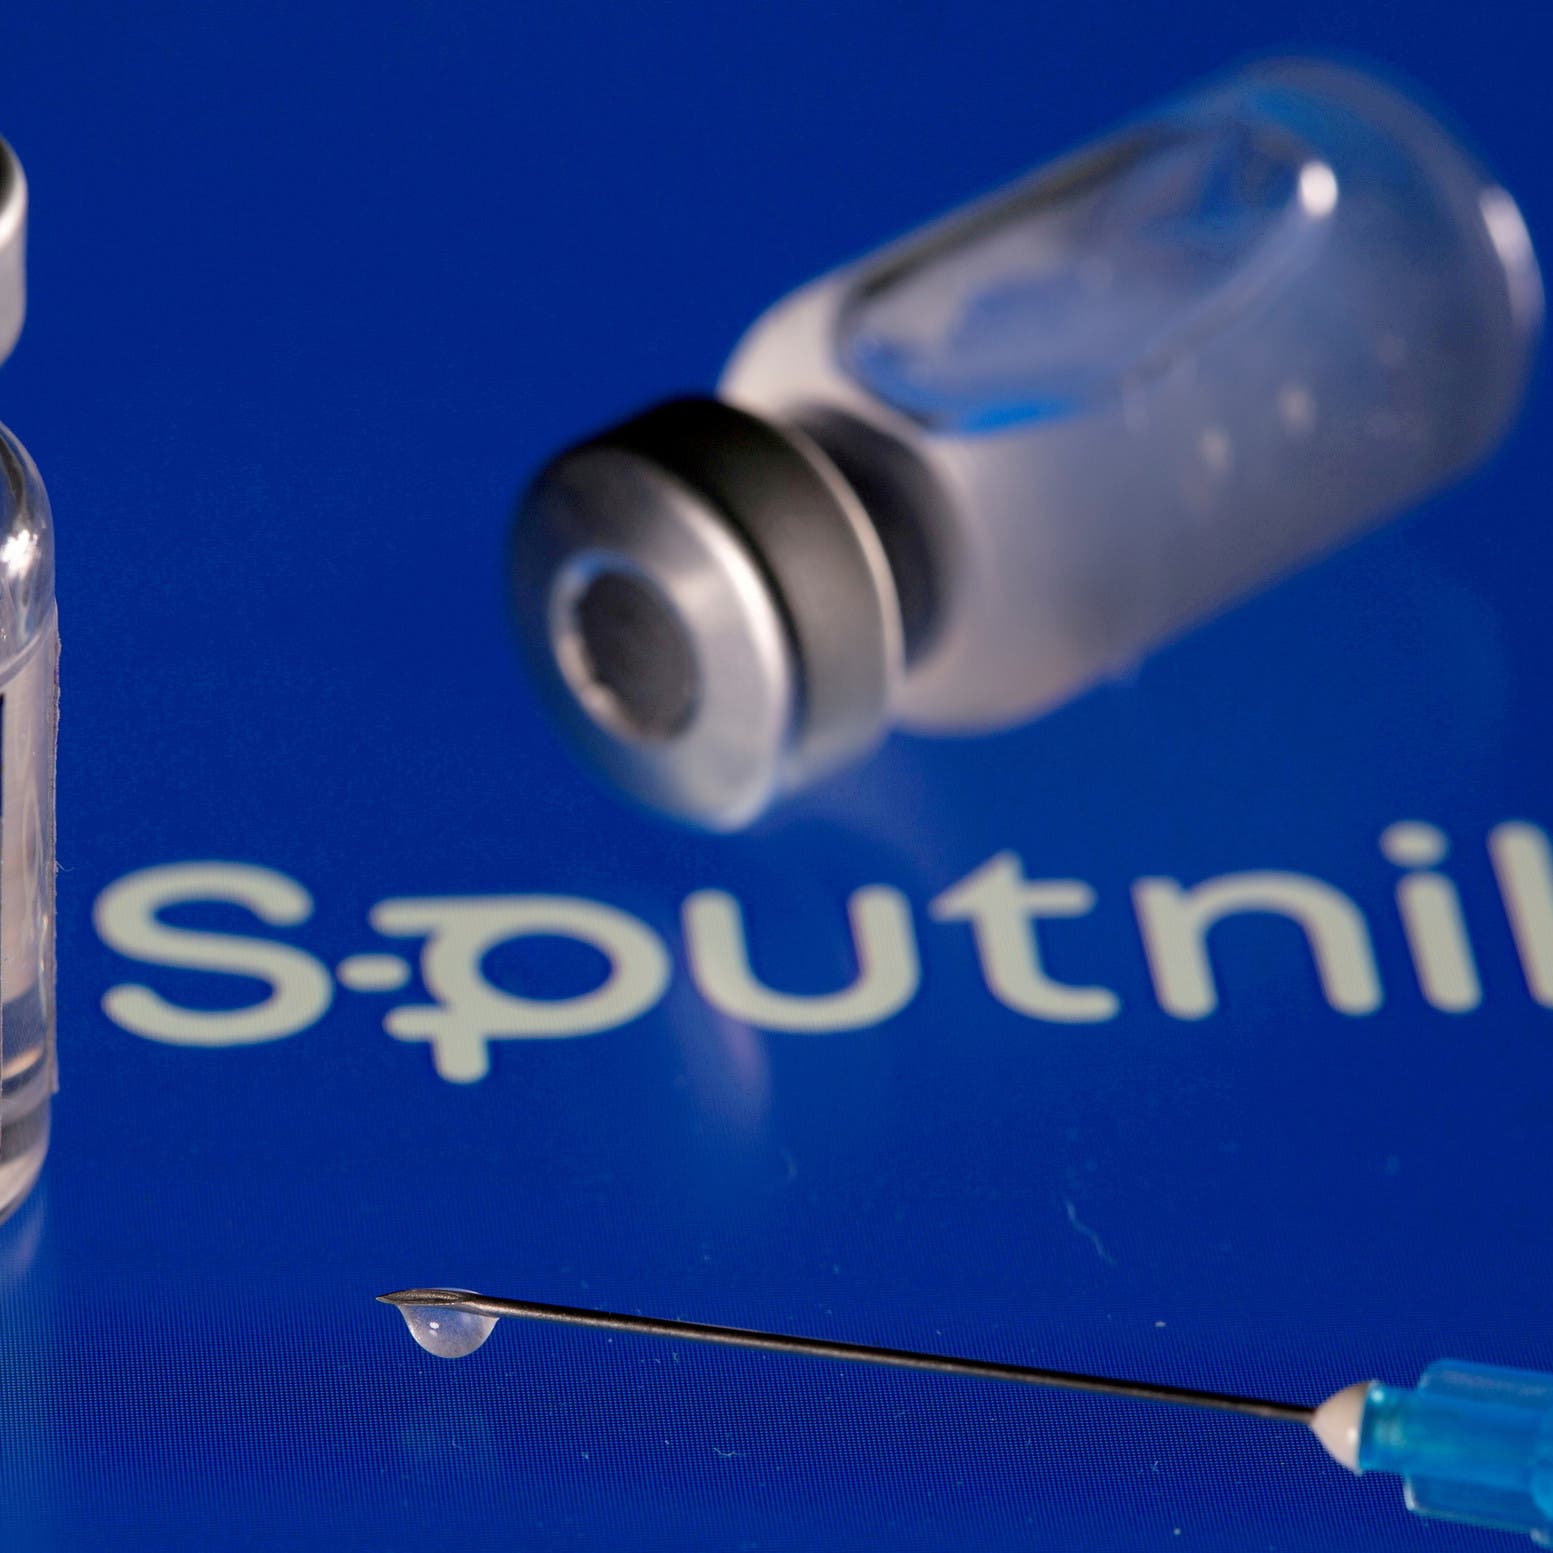 WHO still reviewing Sputnik V vaccine data, as Russia presses bid